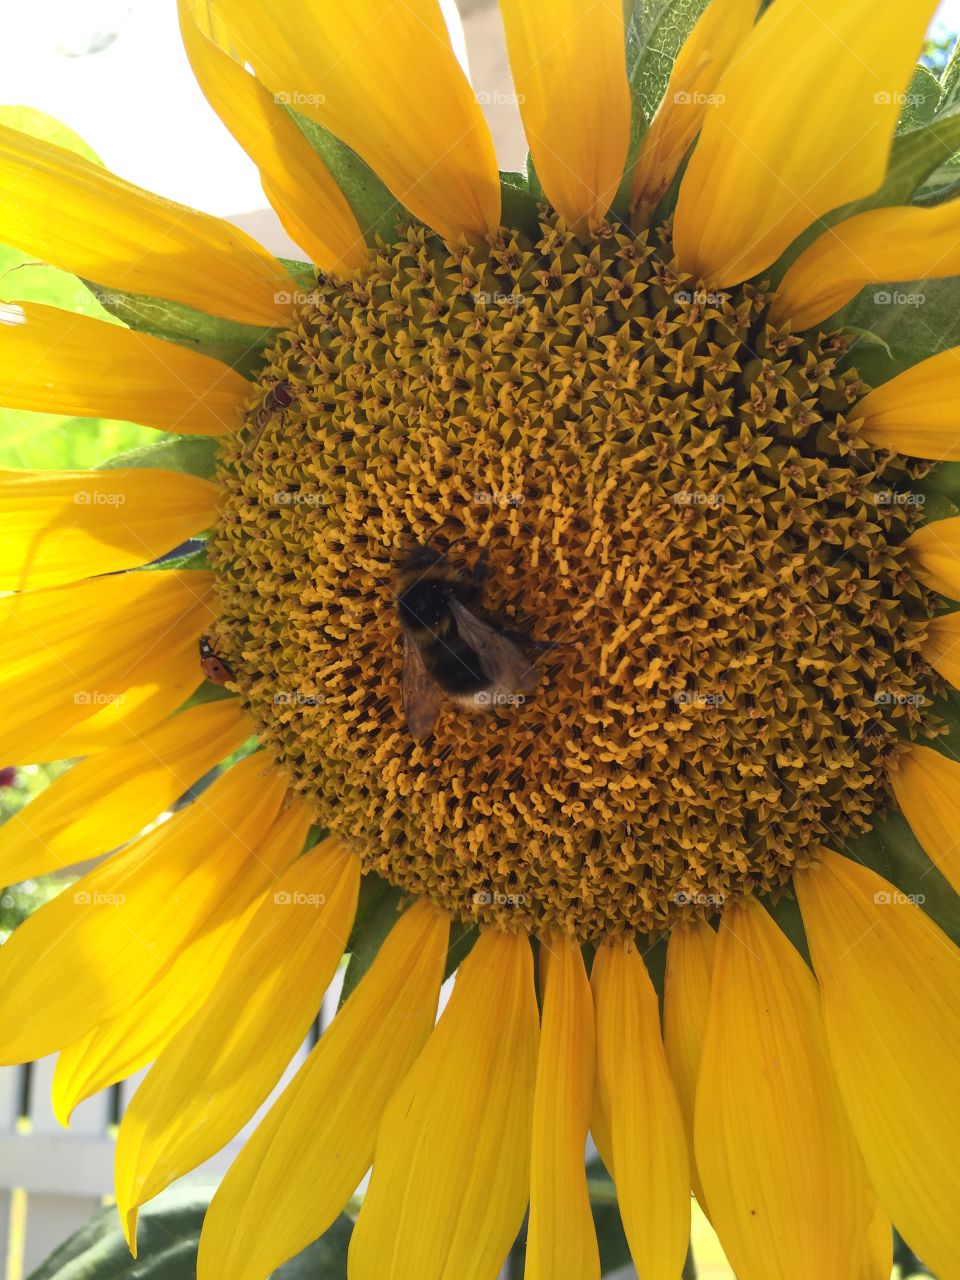 Bee and sunflowers